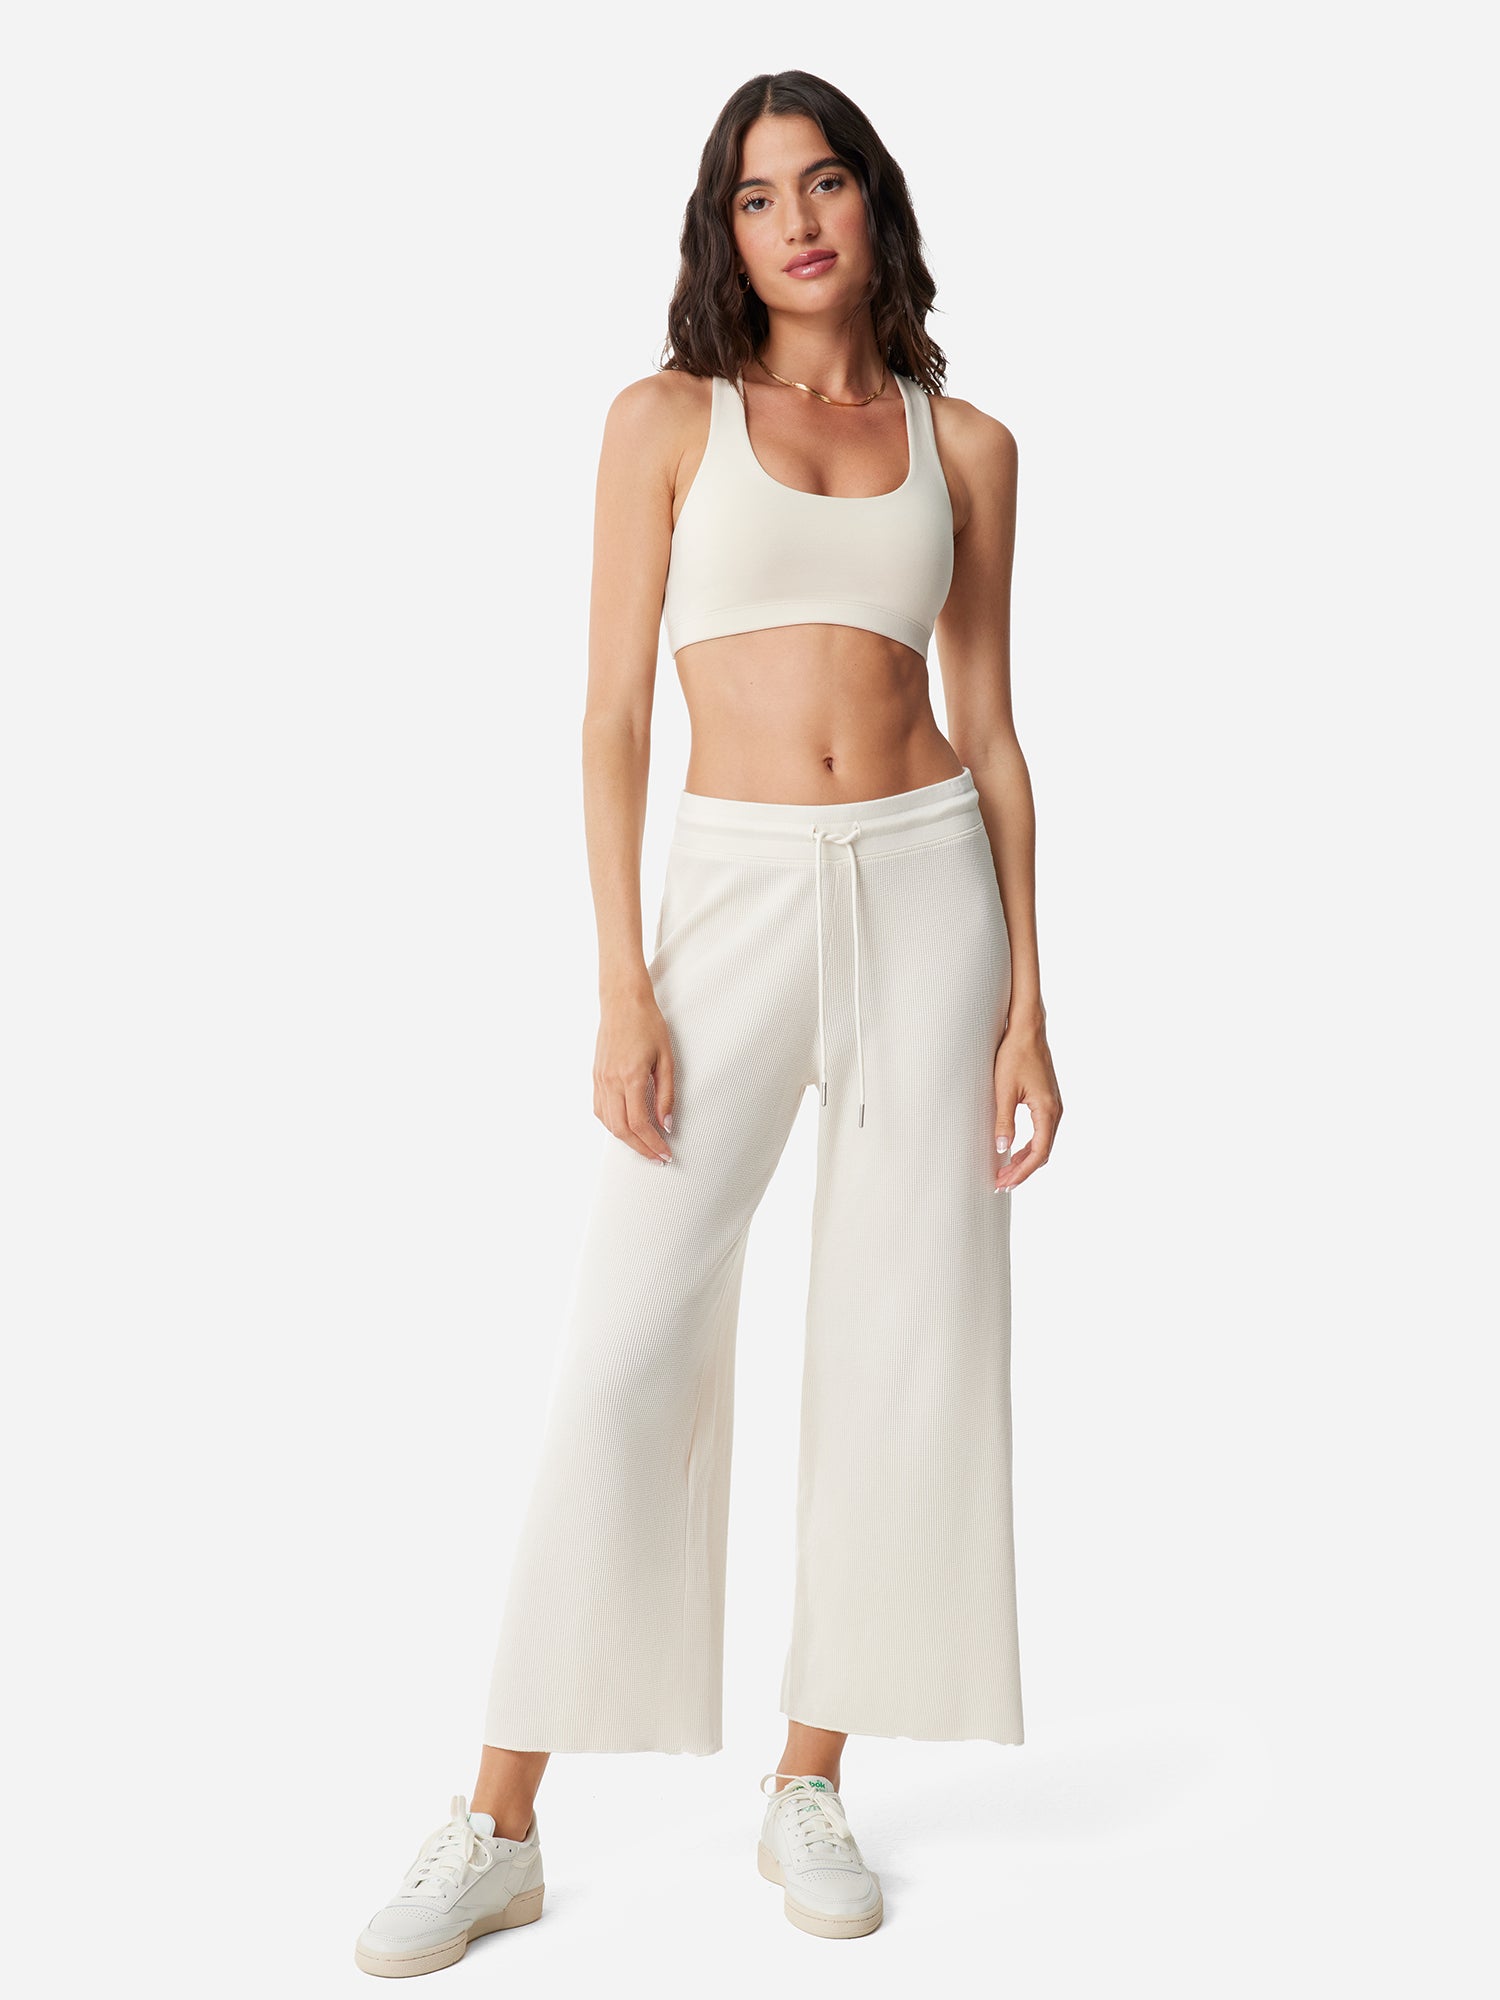 Ladies Womens White Capri Pants Cropped Trousers 100% Cotton Size Large UK  14-16